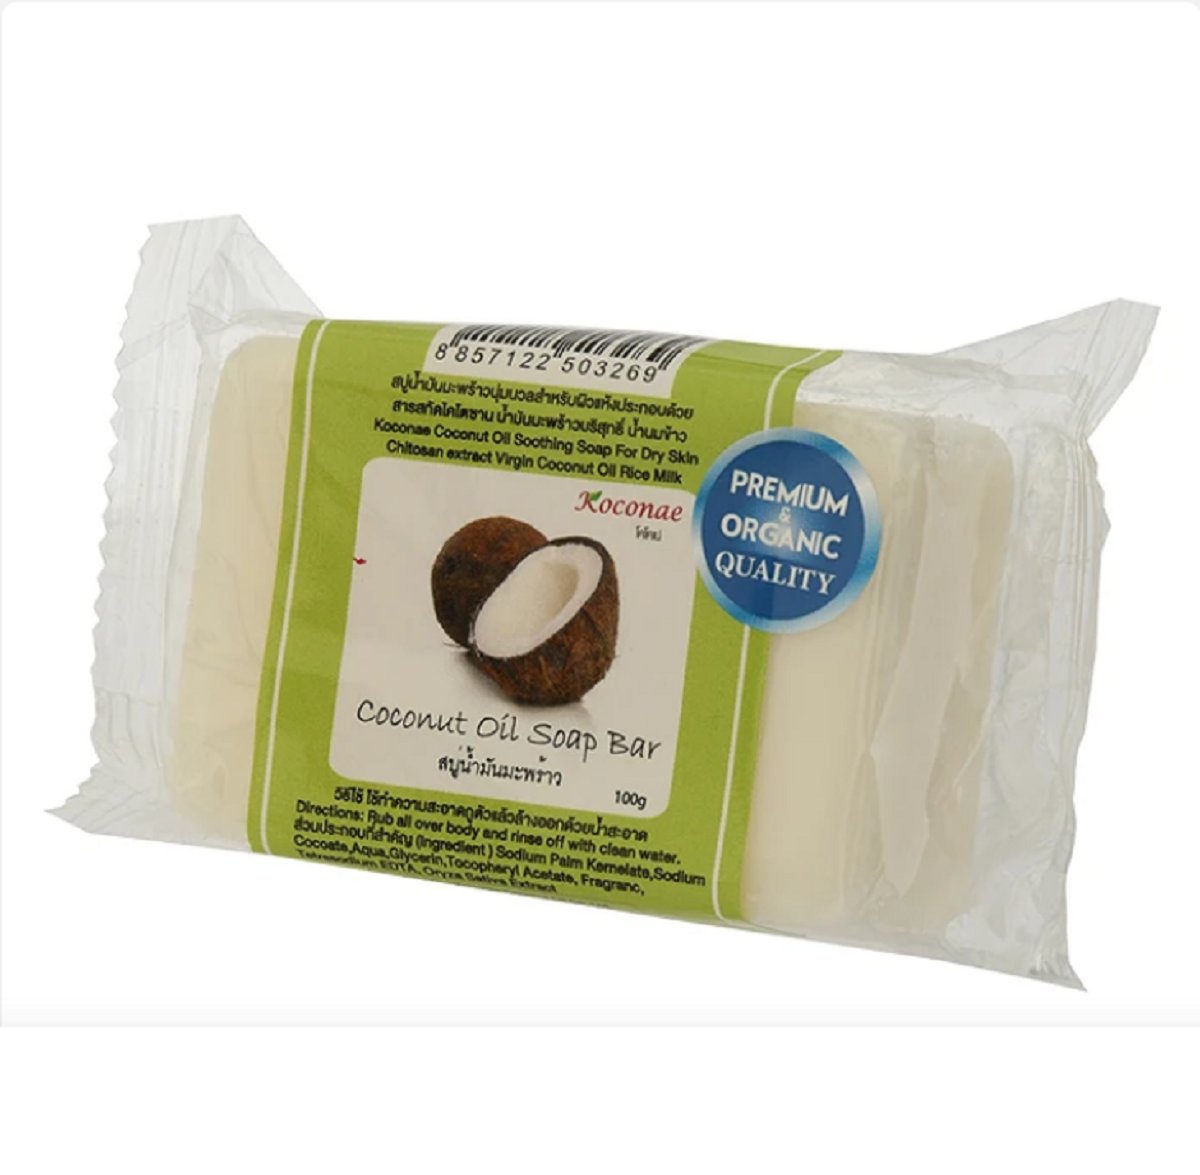 Koconae Coconut Oil Soap Bar